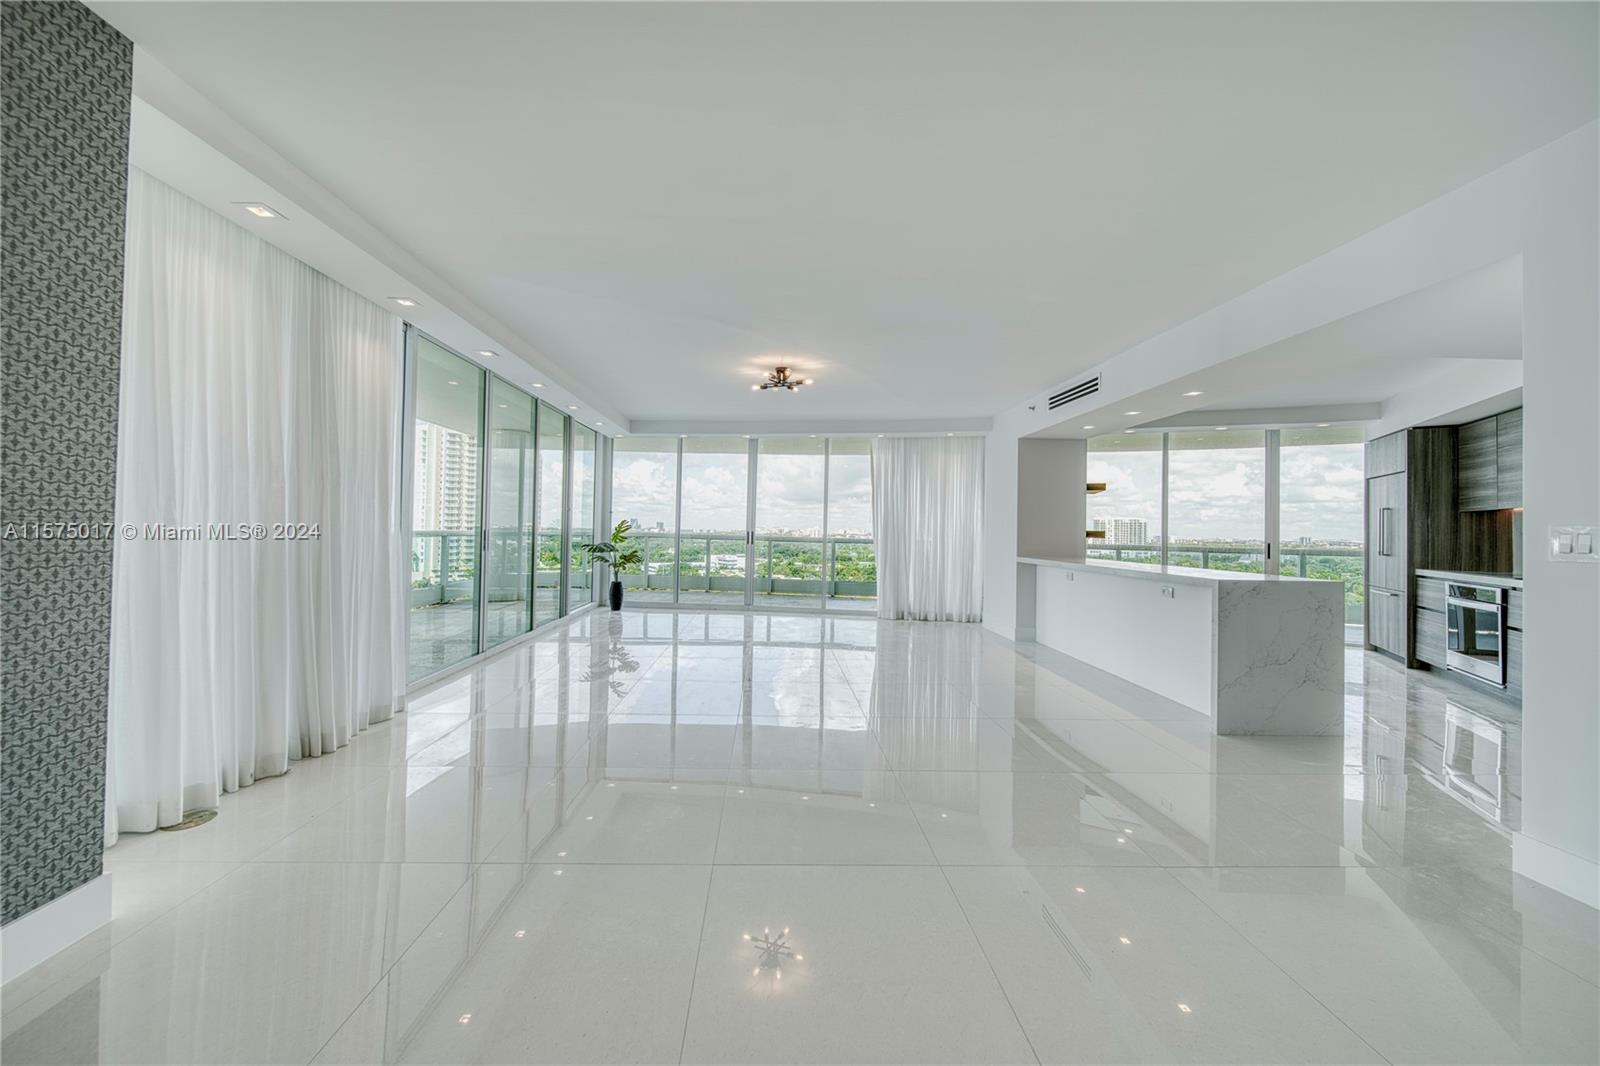 Rental Property at 2127 Brickell Ave 1605, Miami, Broward County, Florida - Bedrooms: 2 
Bathrooms: 2  - $8,750 MO.